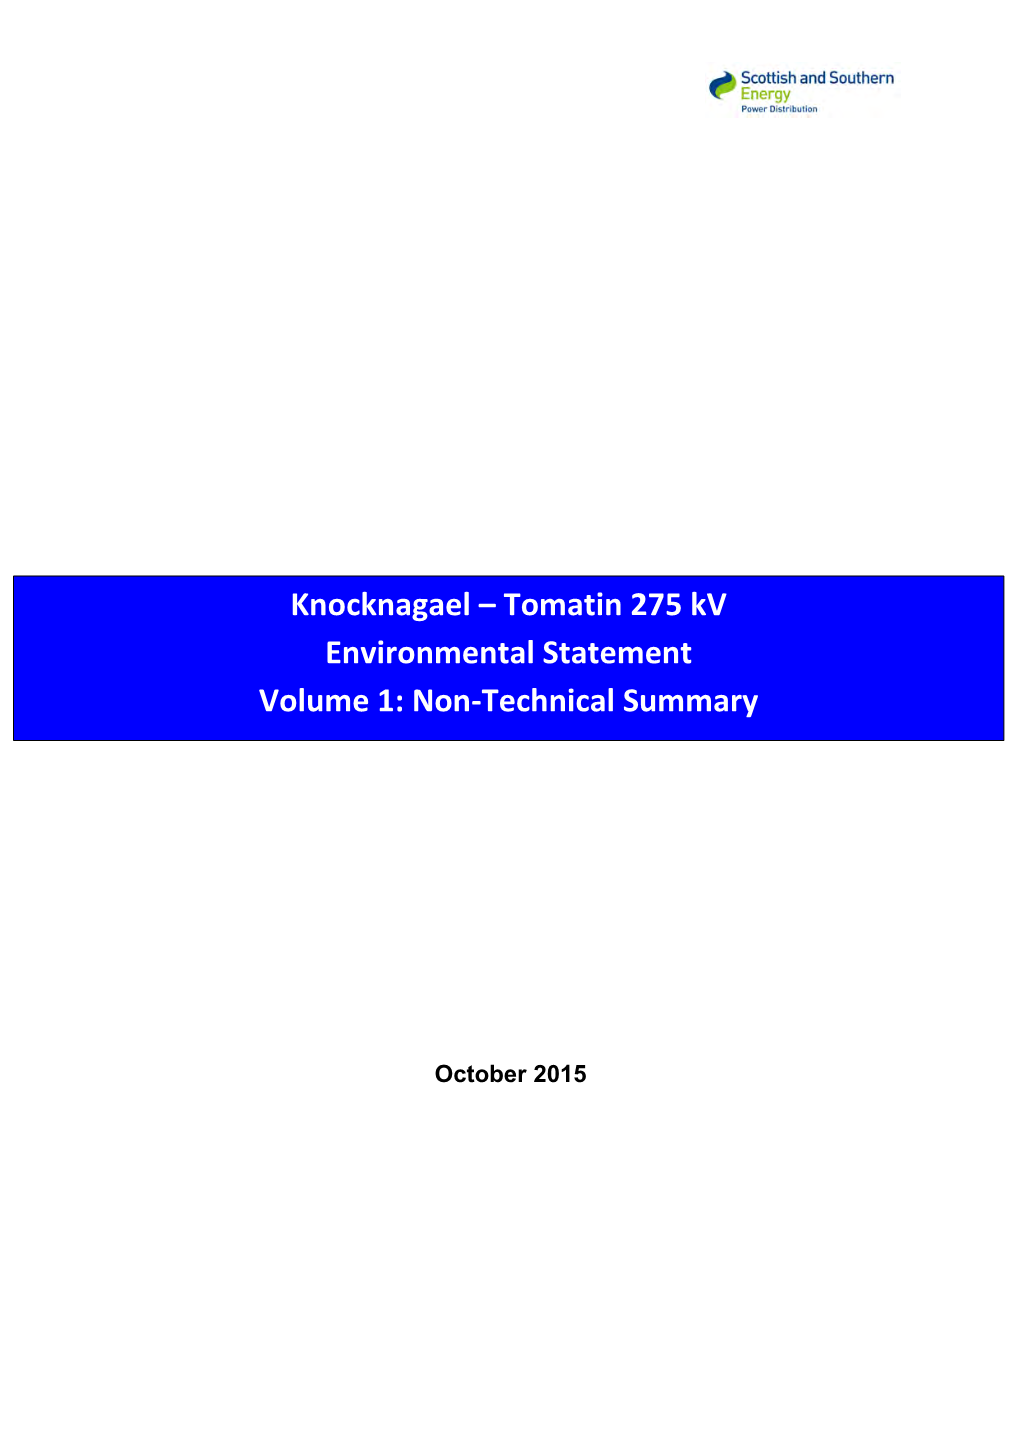 Tomatin 275 Kv Environmental Statement Volume 1: Non-Technical Summary